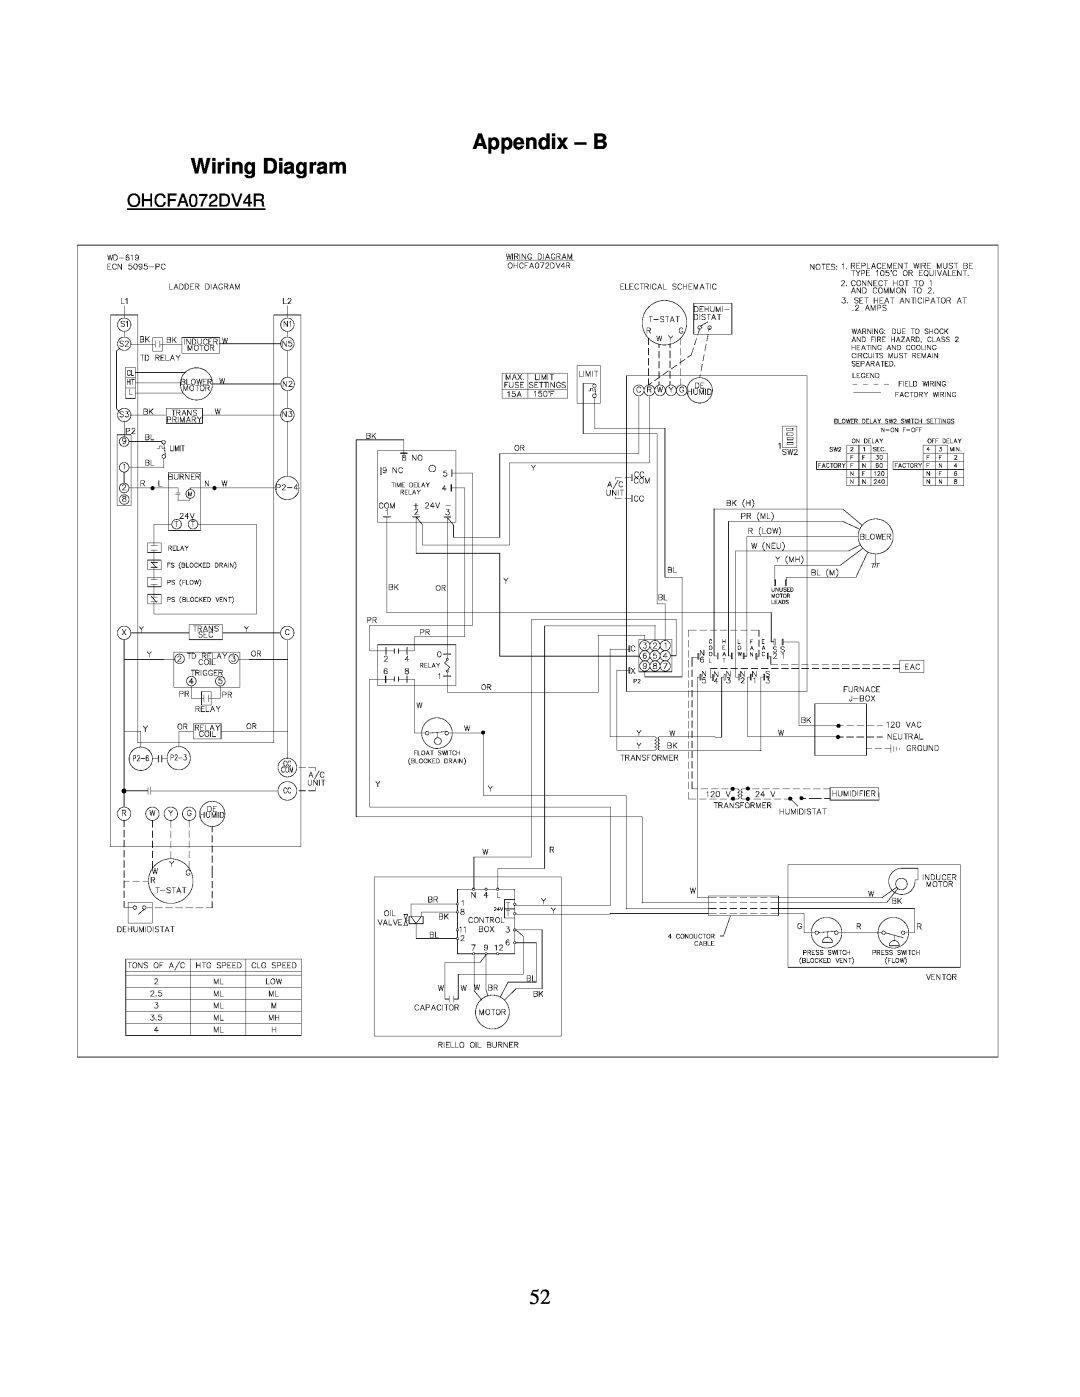 Thermo Products PHCFA072DV4R operation manual Appendix - B Wiring Diagram, OHCFA072DV4R 